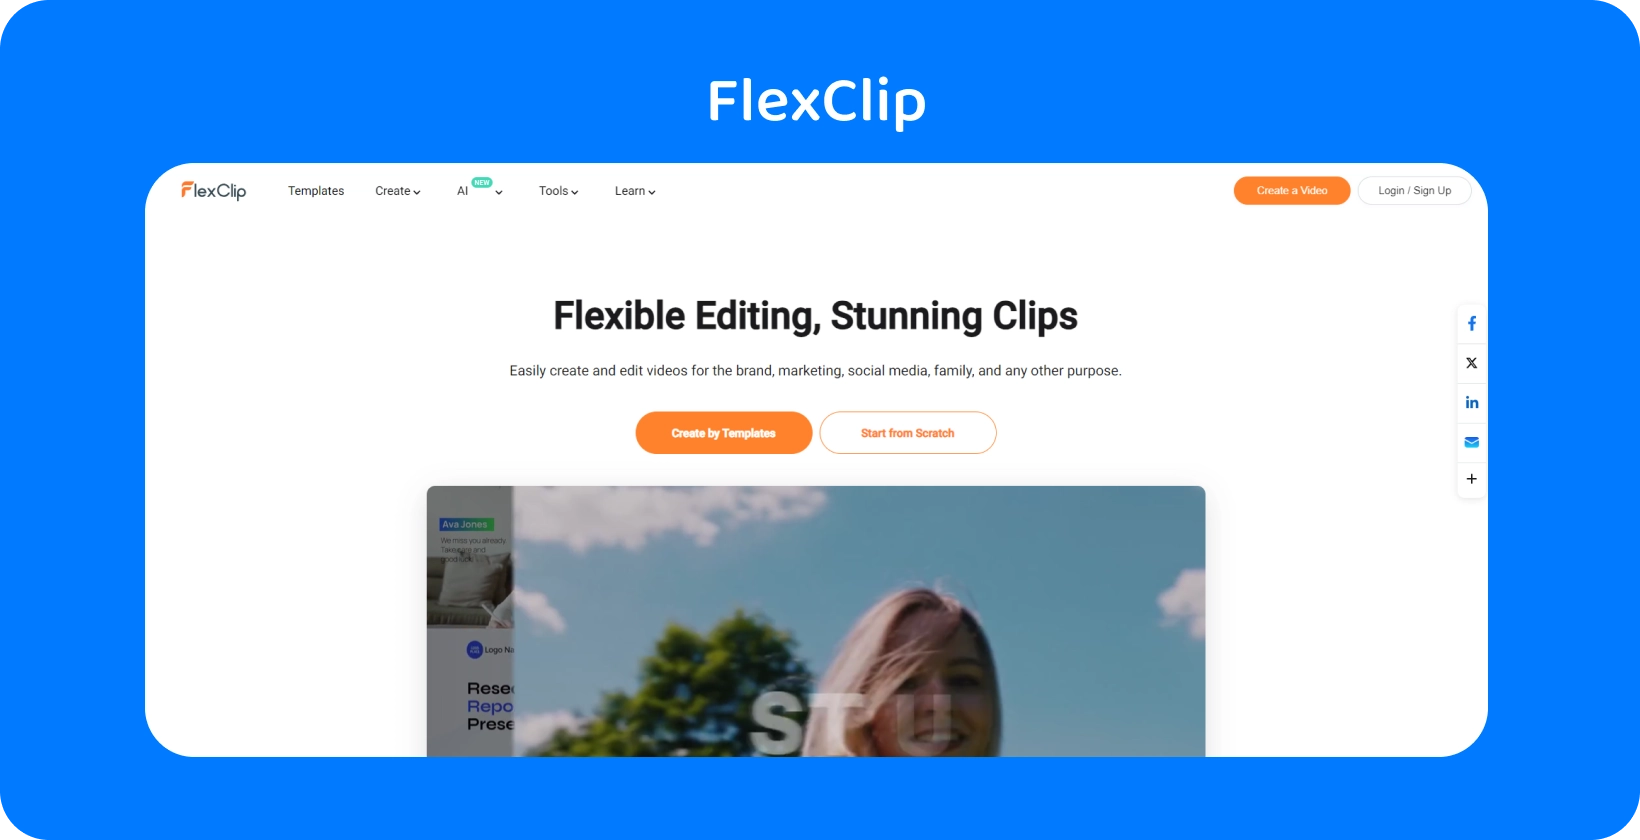 FlexClip 的文本转语音视频制作界面展示了一种简单有效的方法，可以将文本转换为逼真的 AI 语音。